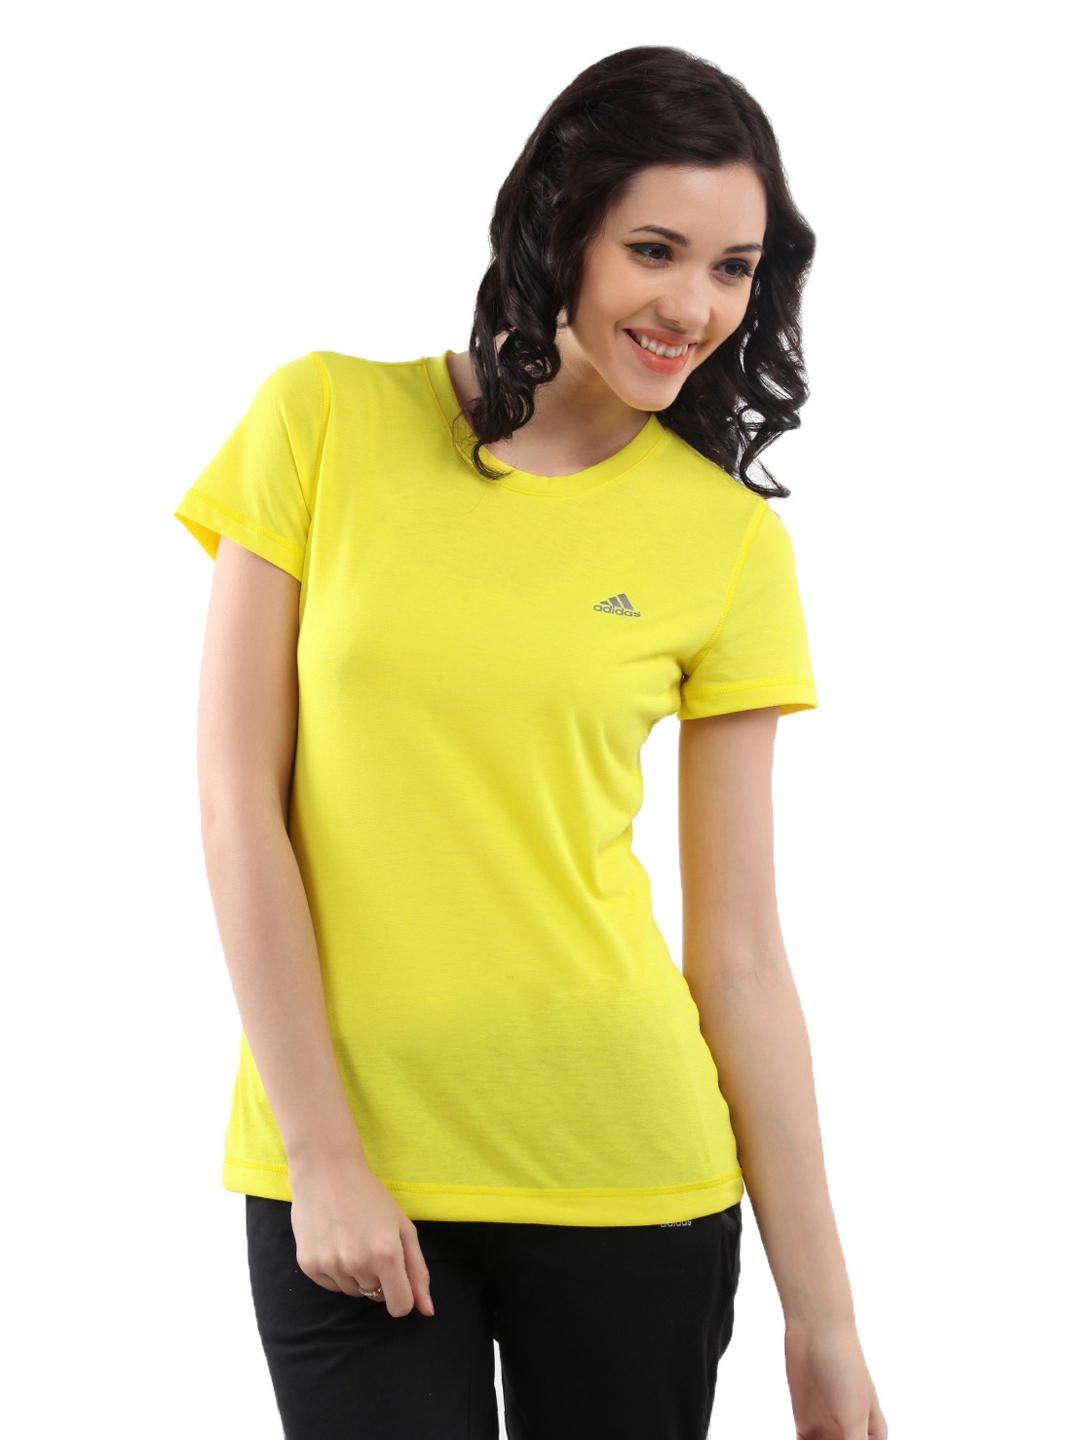 Adidas Women Yellow Climalite Tshirt ea4c6a2d2afab139e09af742dbd6ab14 images